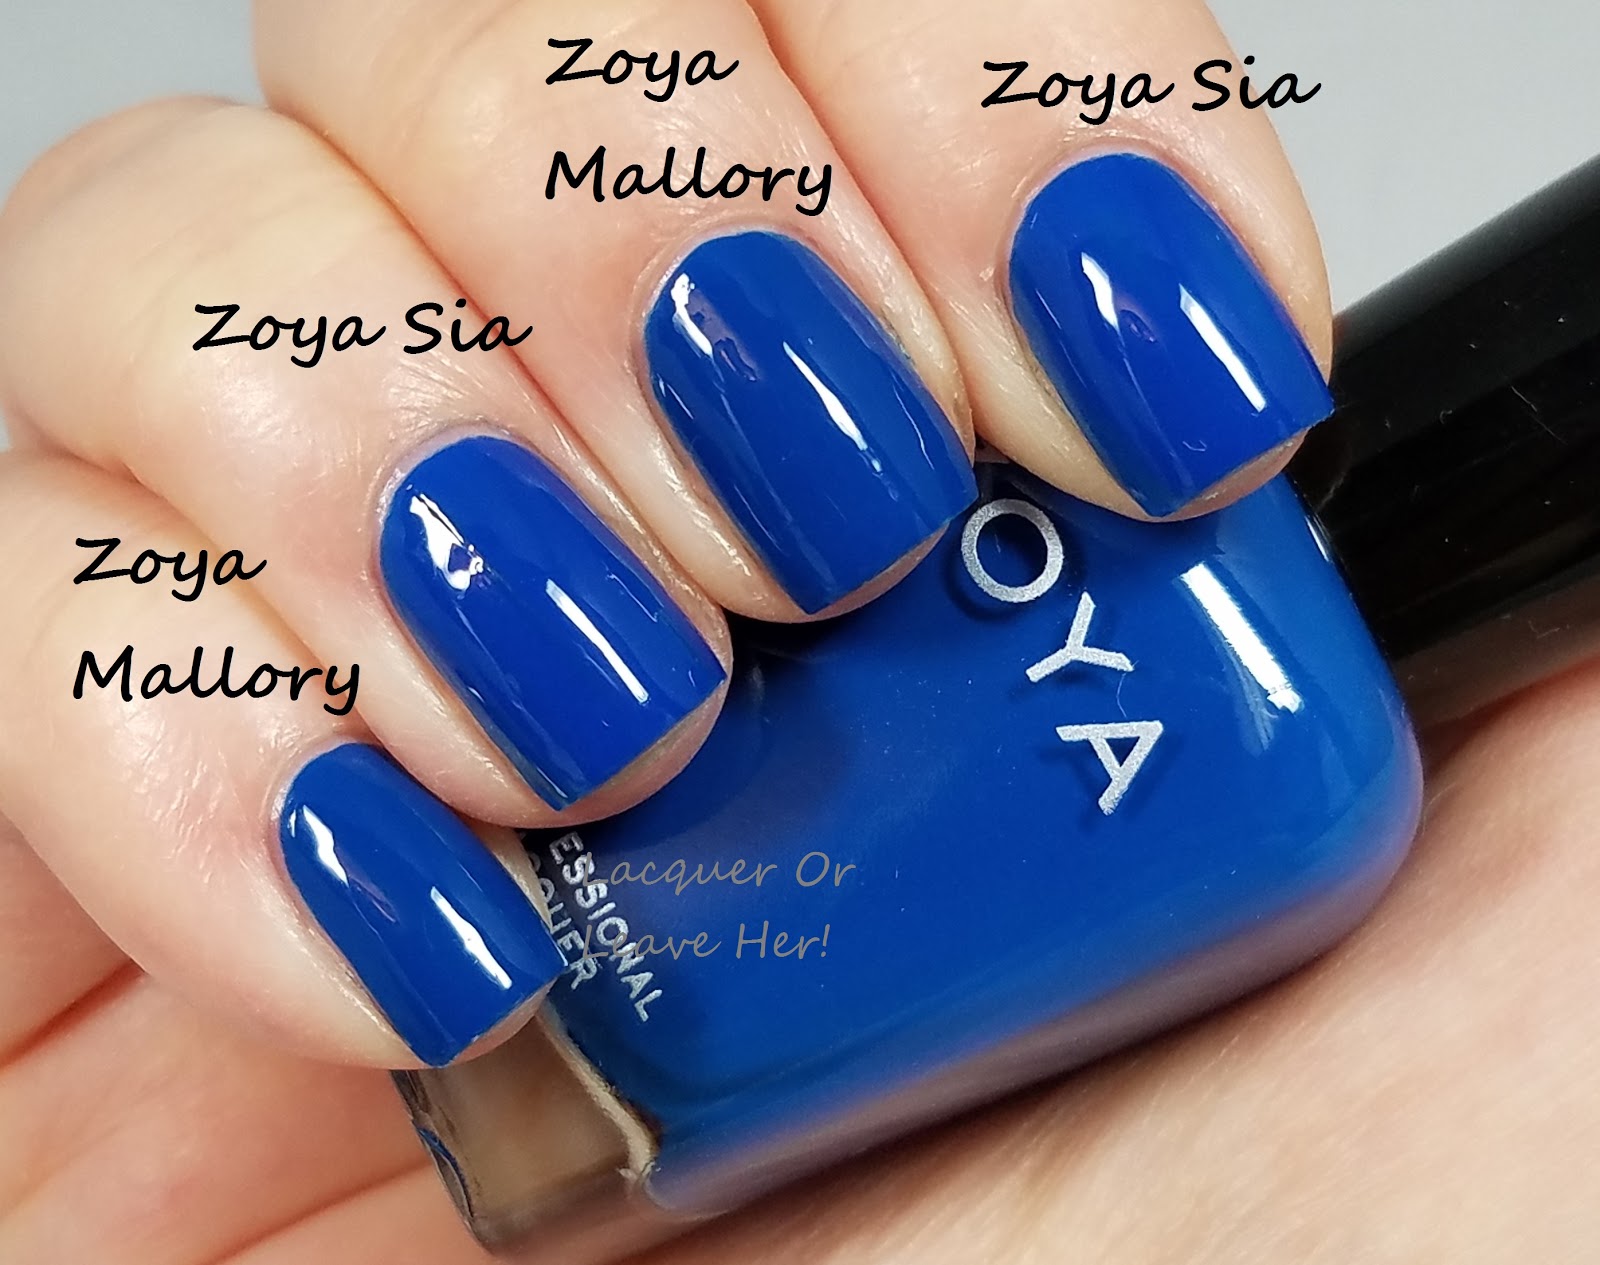 4. Zoya "Sia" Nail Polish - wide 5